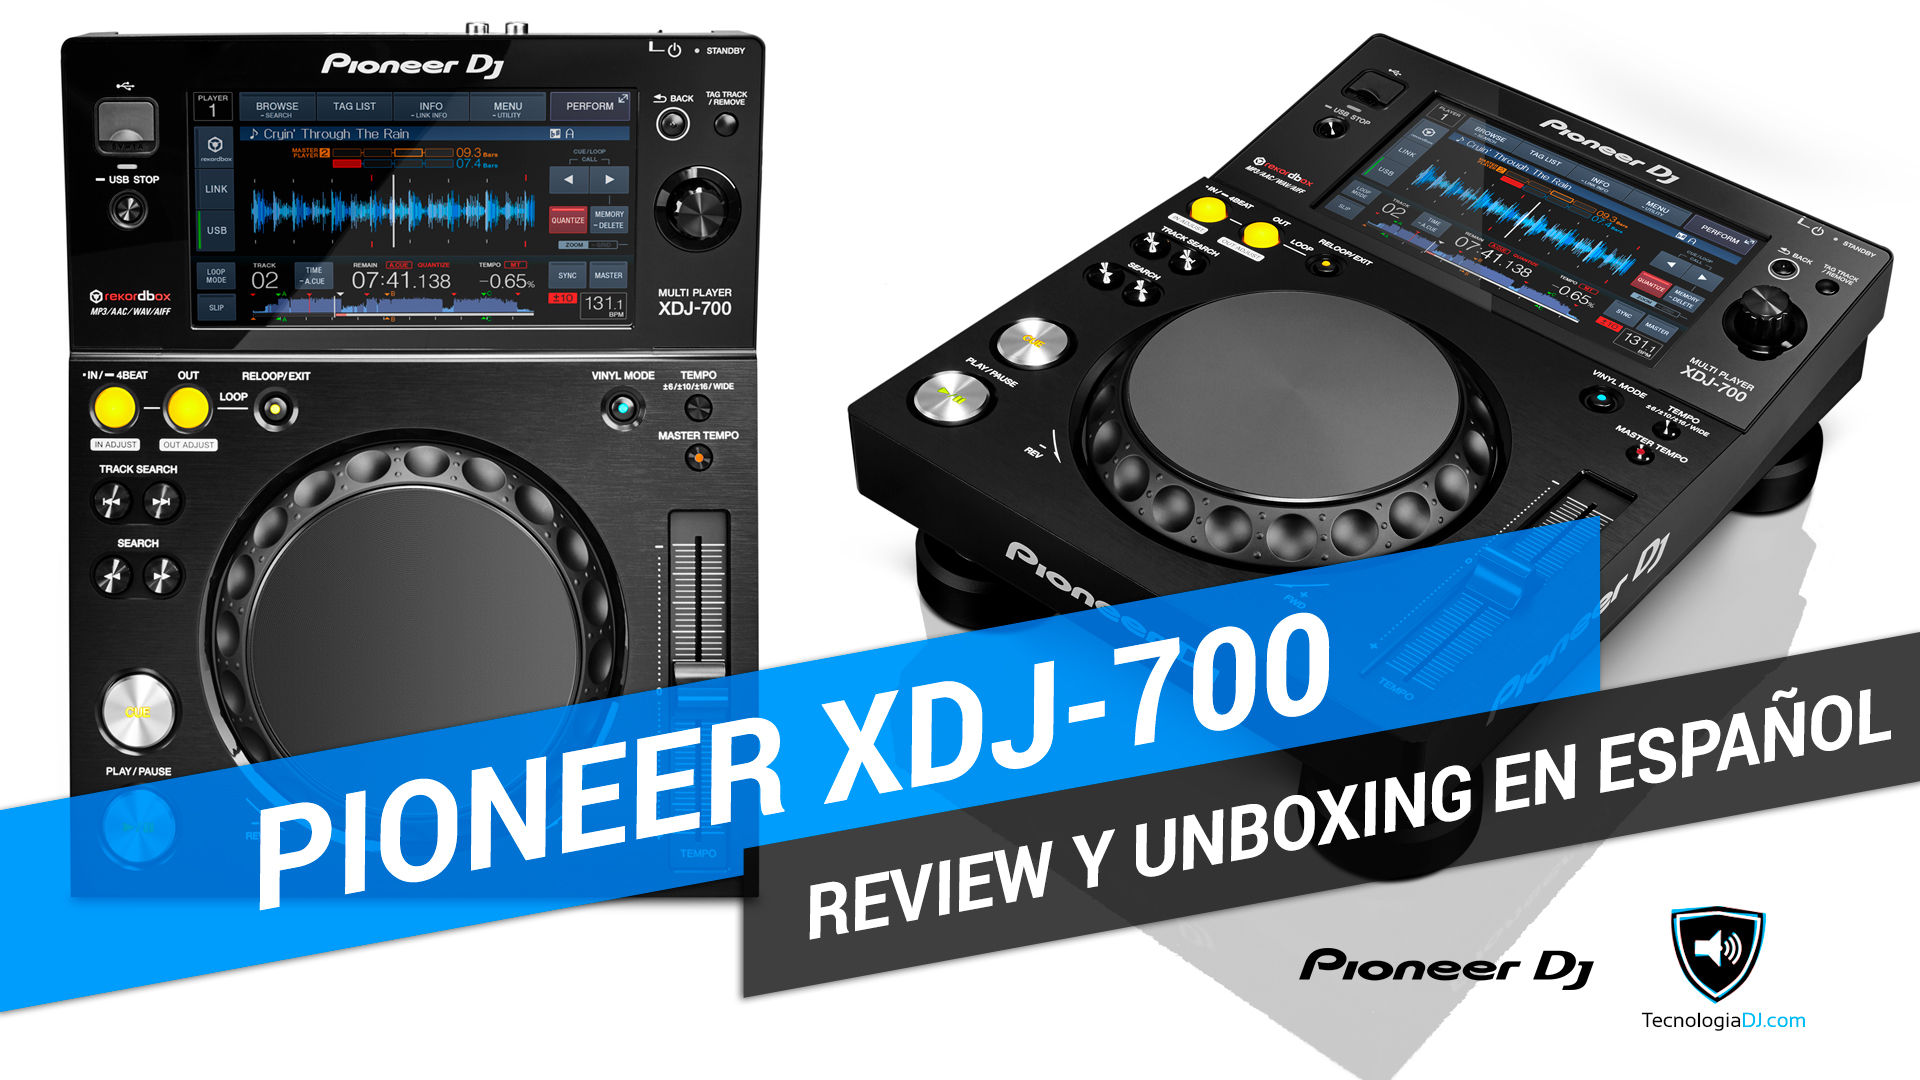 Rewiew y unboxing en español Pioneer XDJ-700